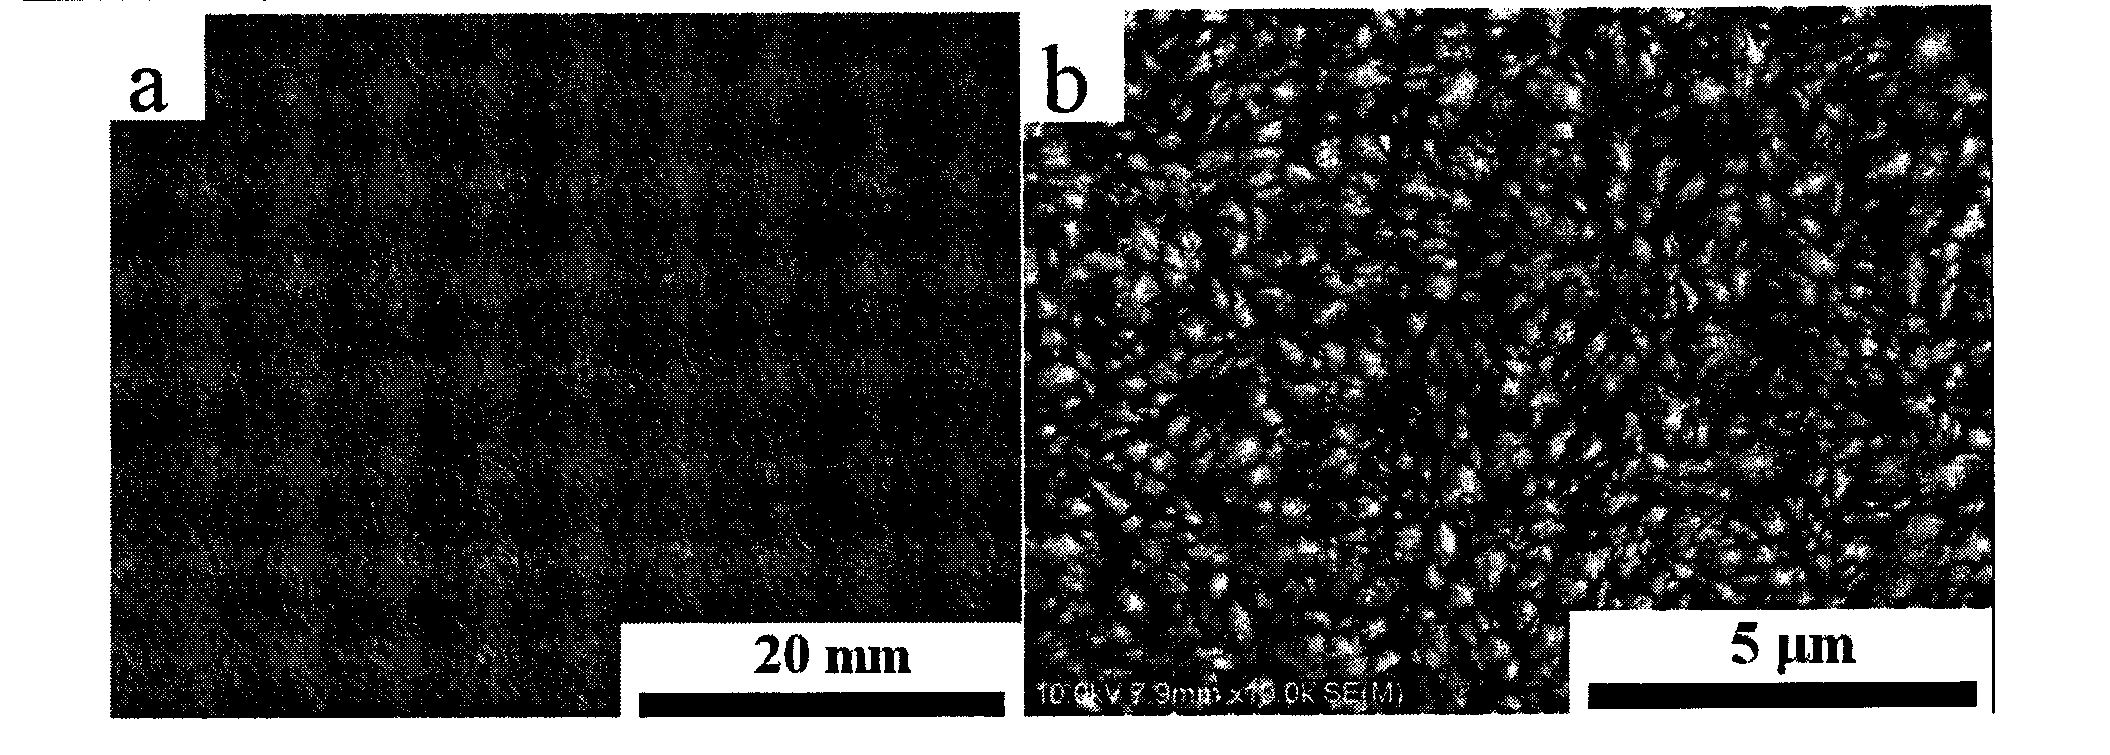 Preparation method of porous nanometer crystal electrodes and application of porous nanometer crystal electrodes